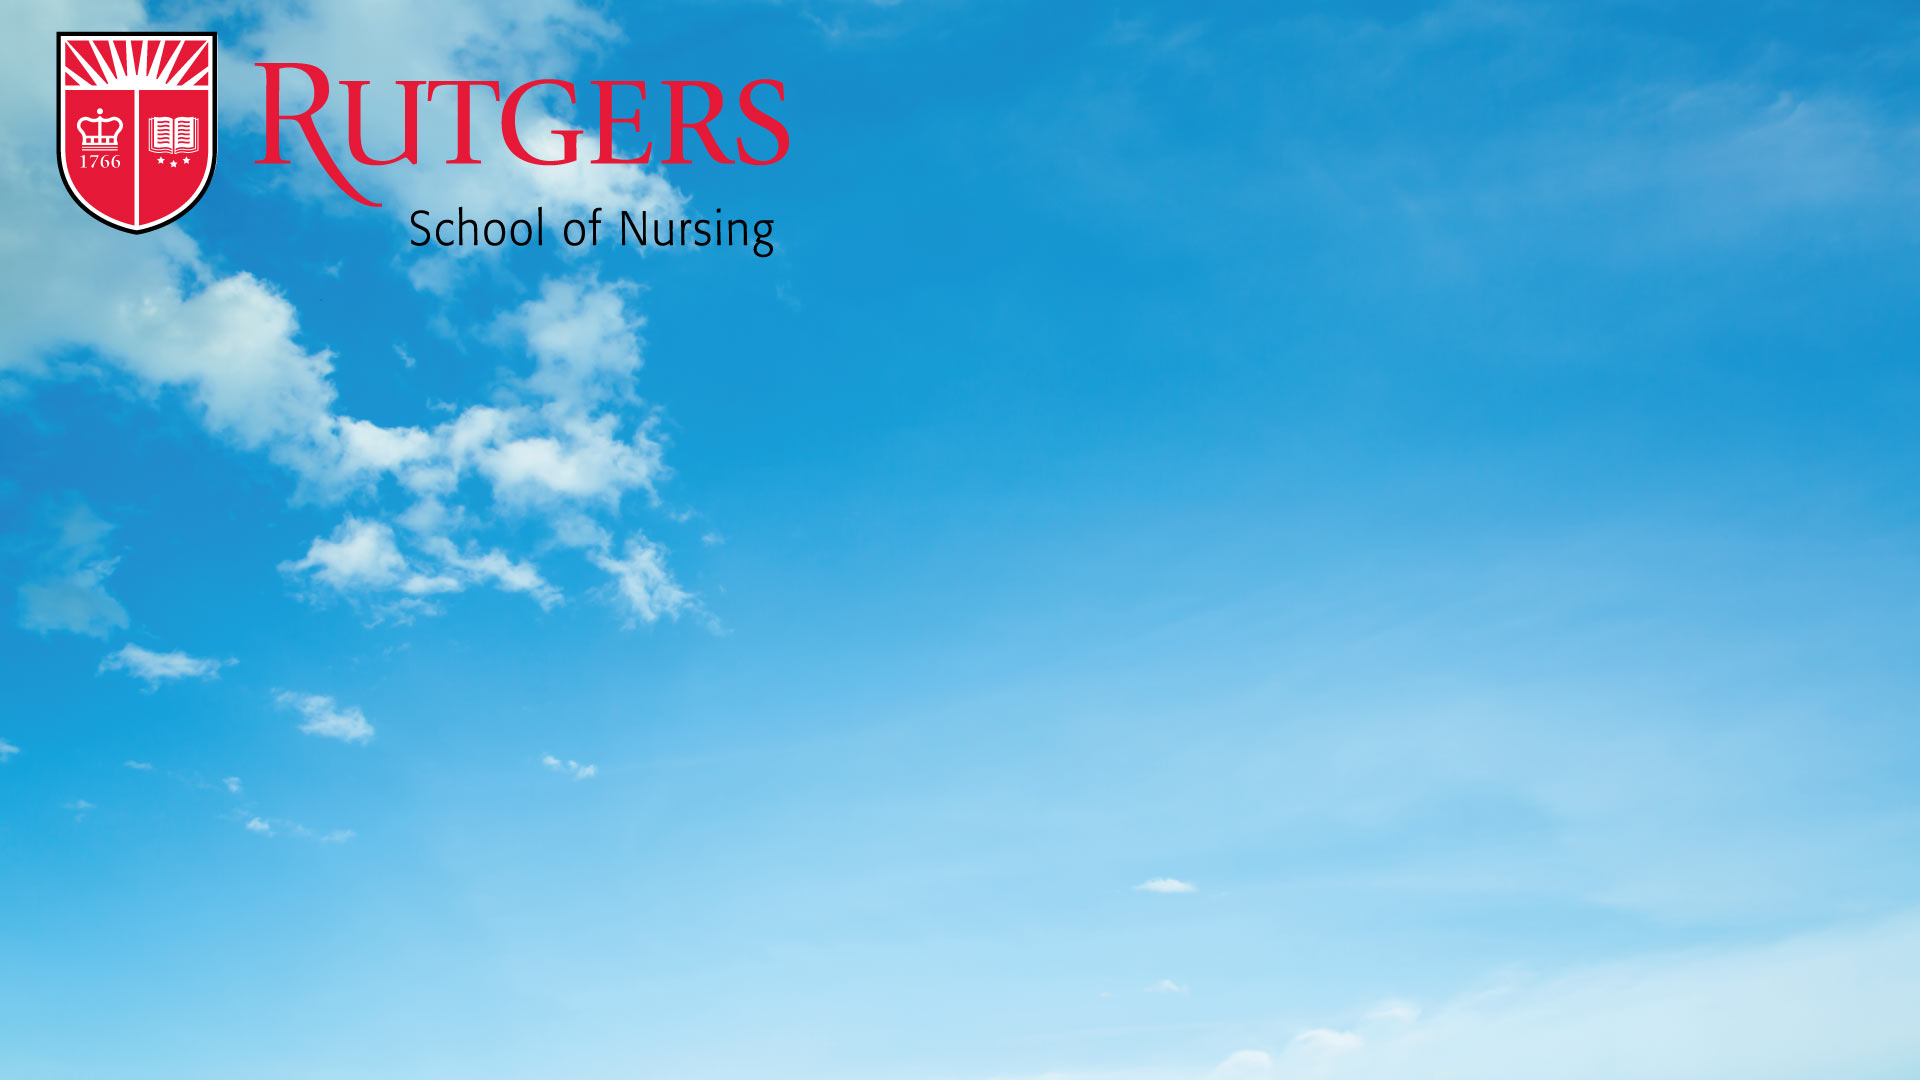 Visual Identity and Branding Resources - Rutgers School of Nursing Regarding Rutgers Powerpoint Template